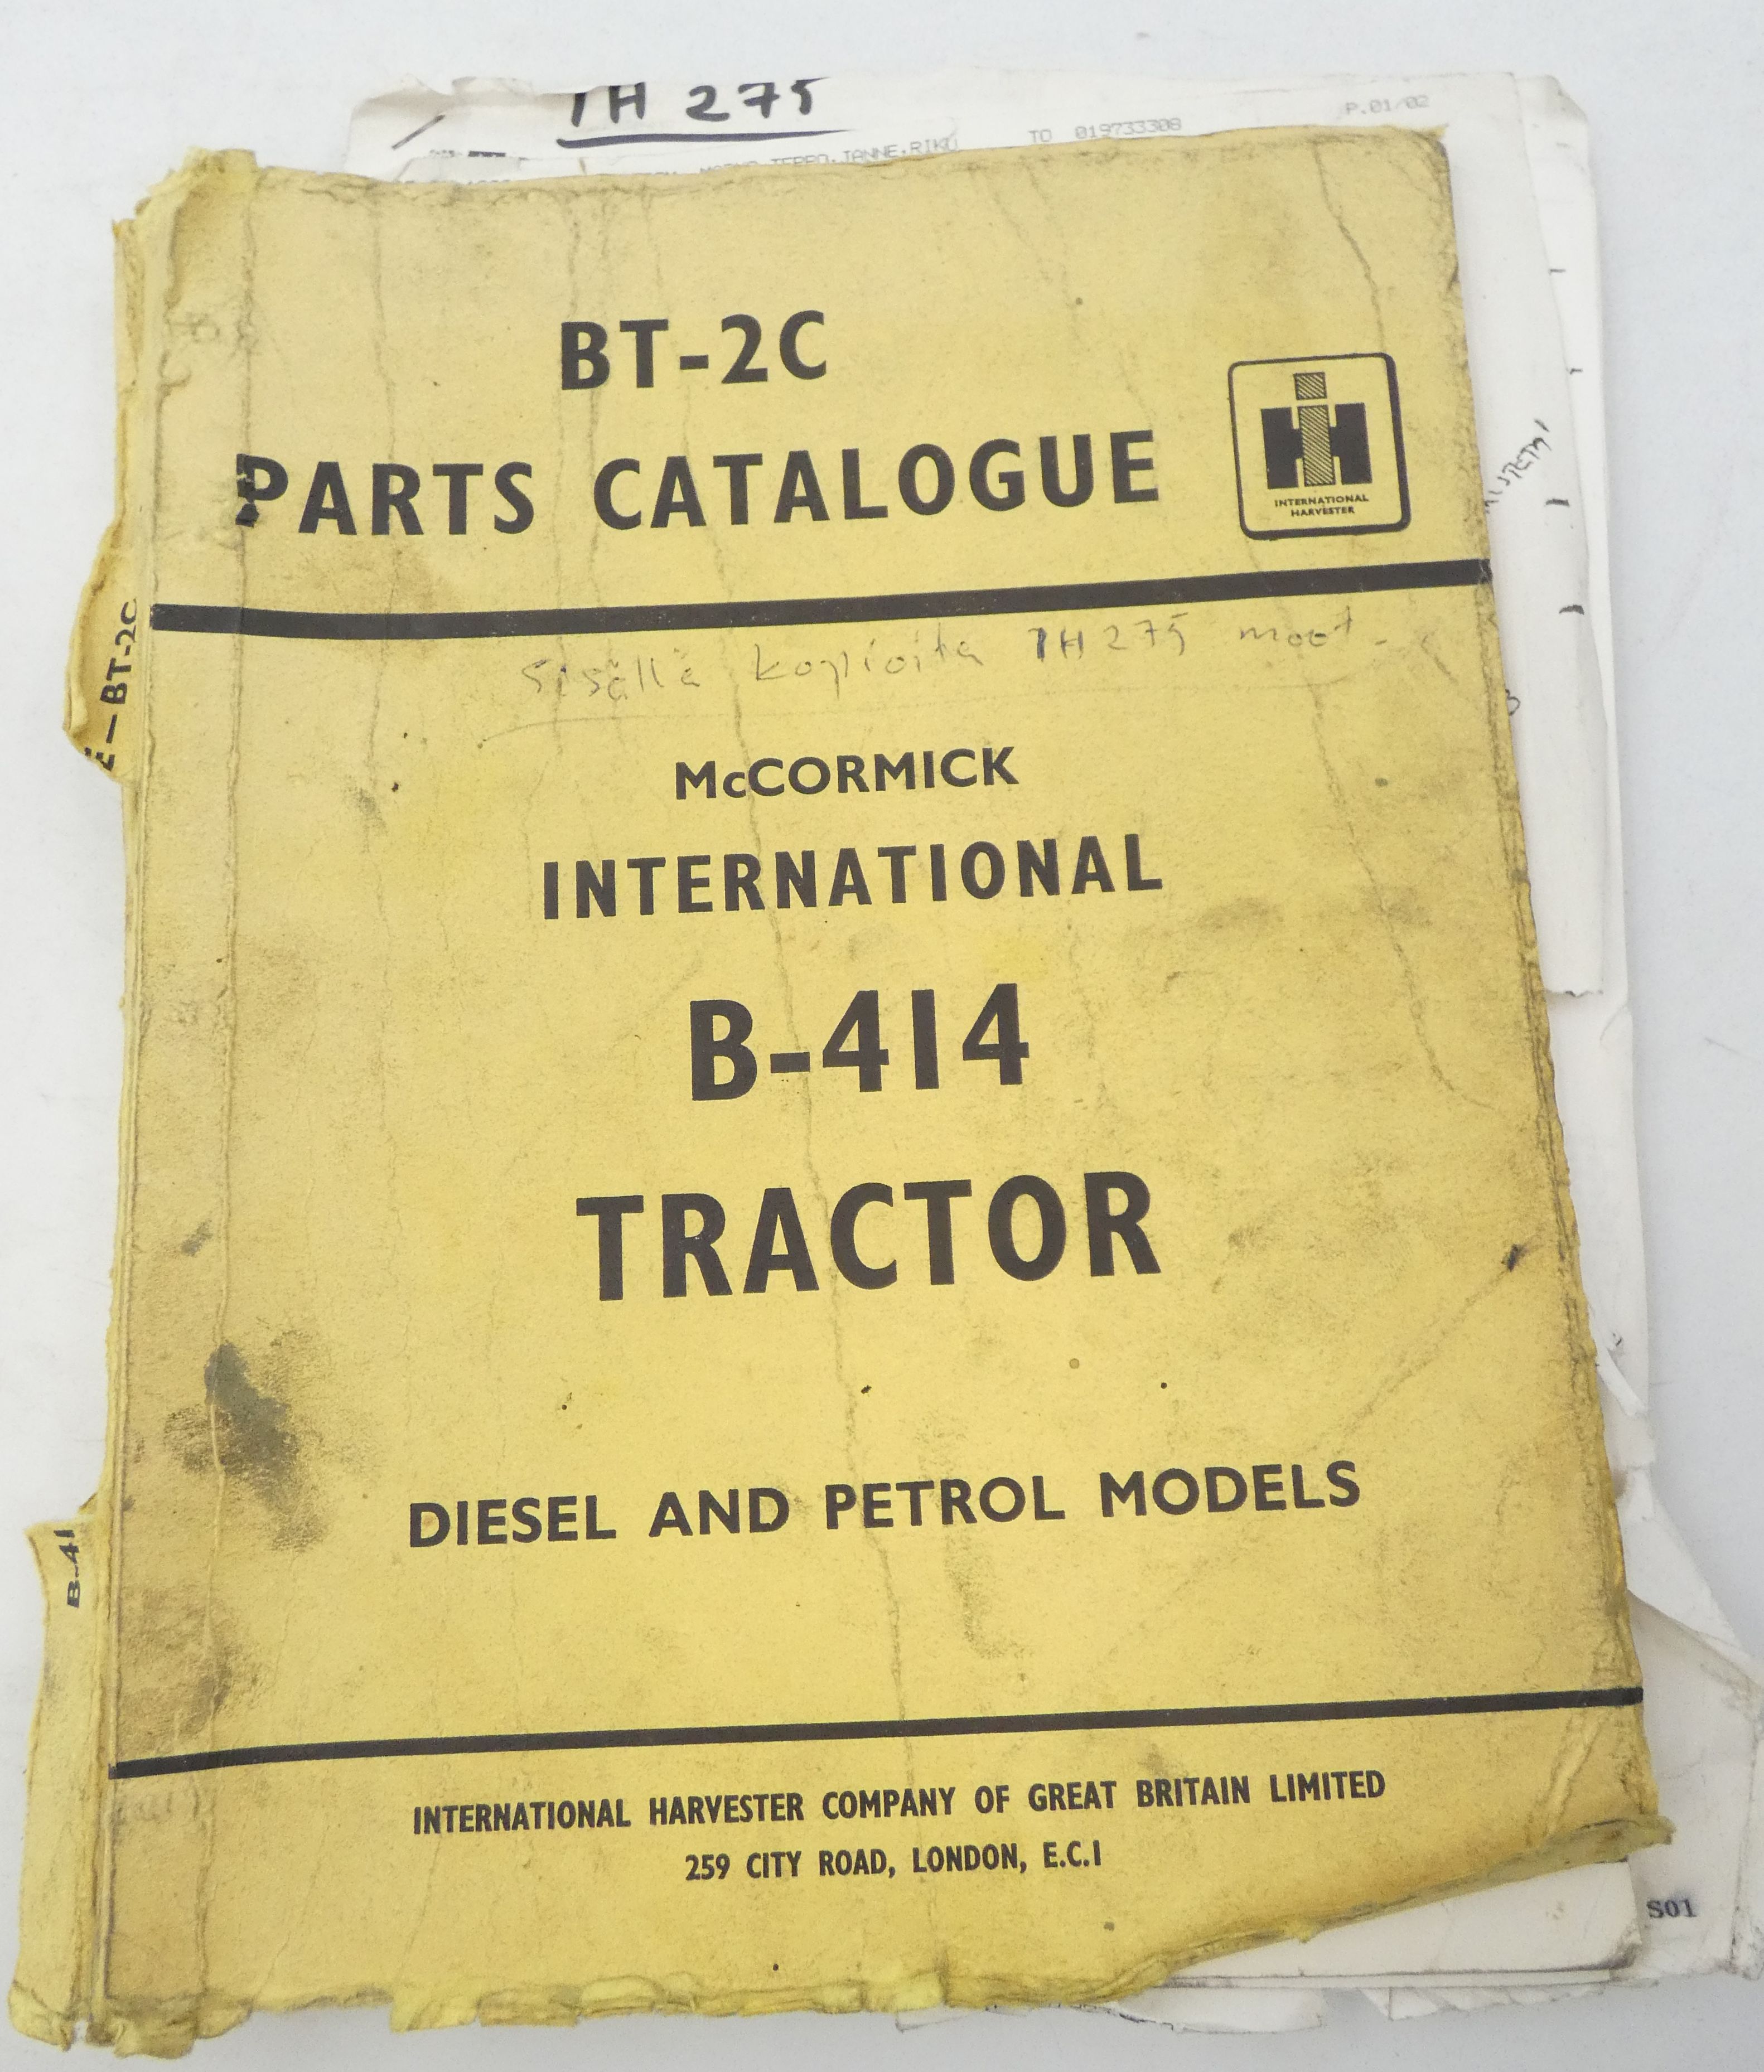 McCormick International B-414 tractor diesel and petrol models parts catalogue